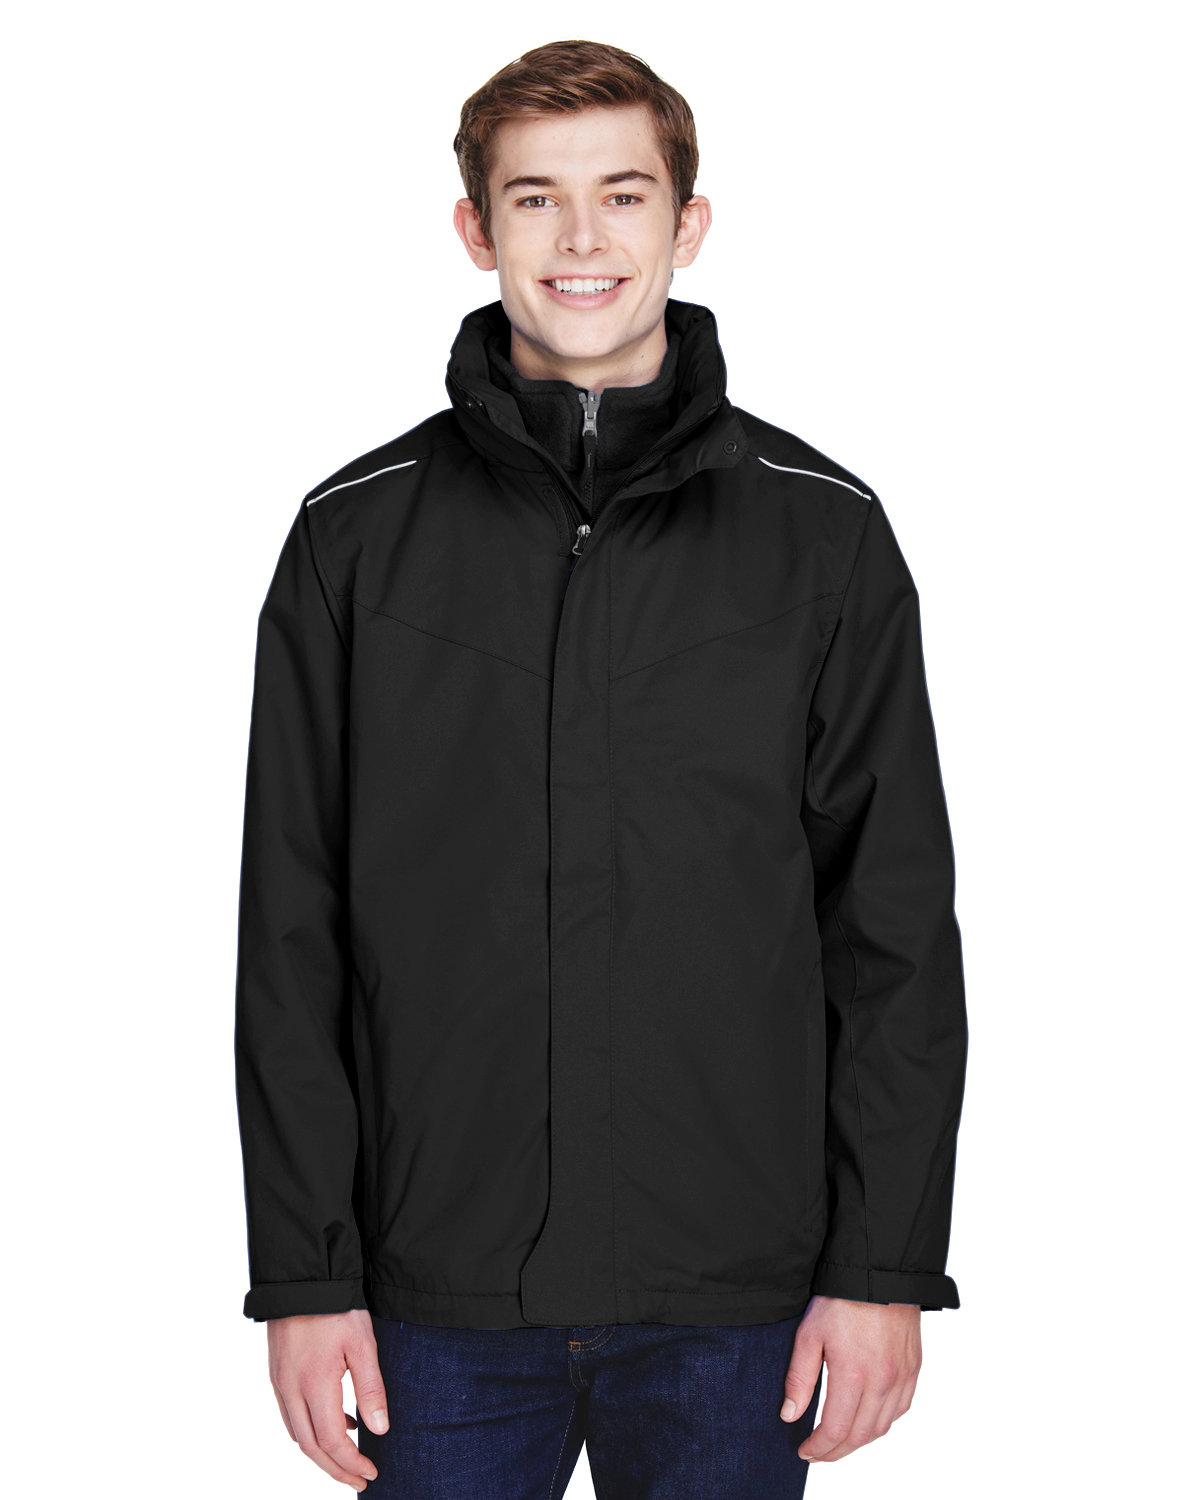 Core 365 88205T - Men's Tall Region 3-in-1 Jacket with Fleece Liner